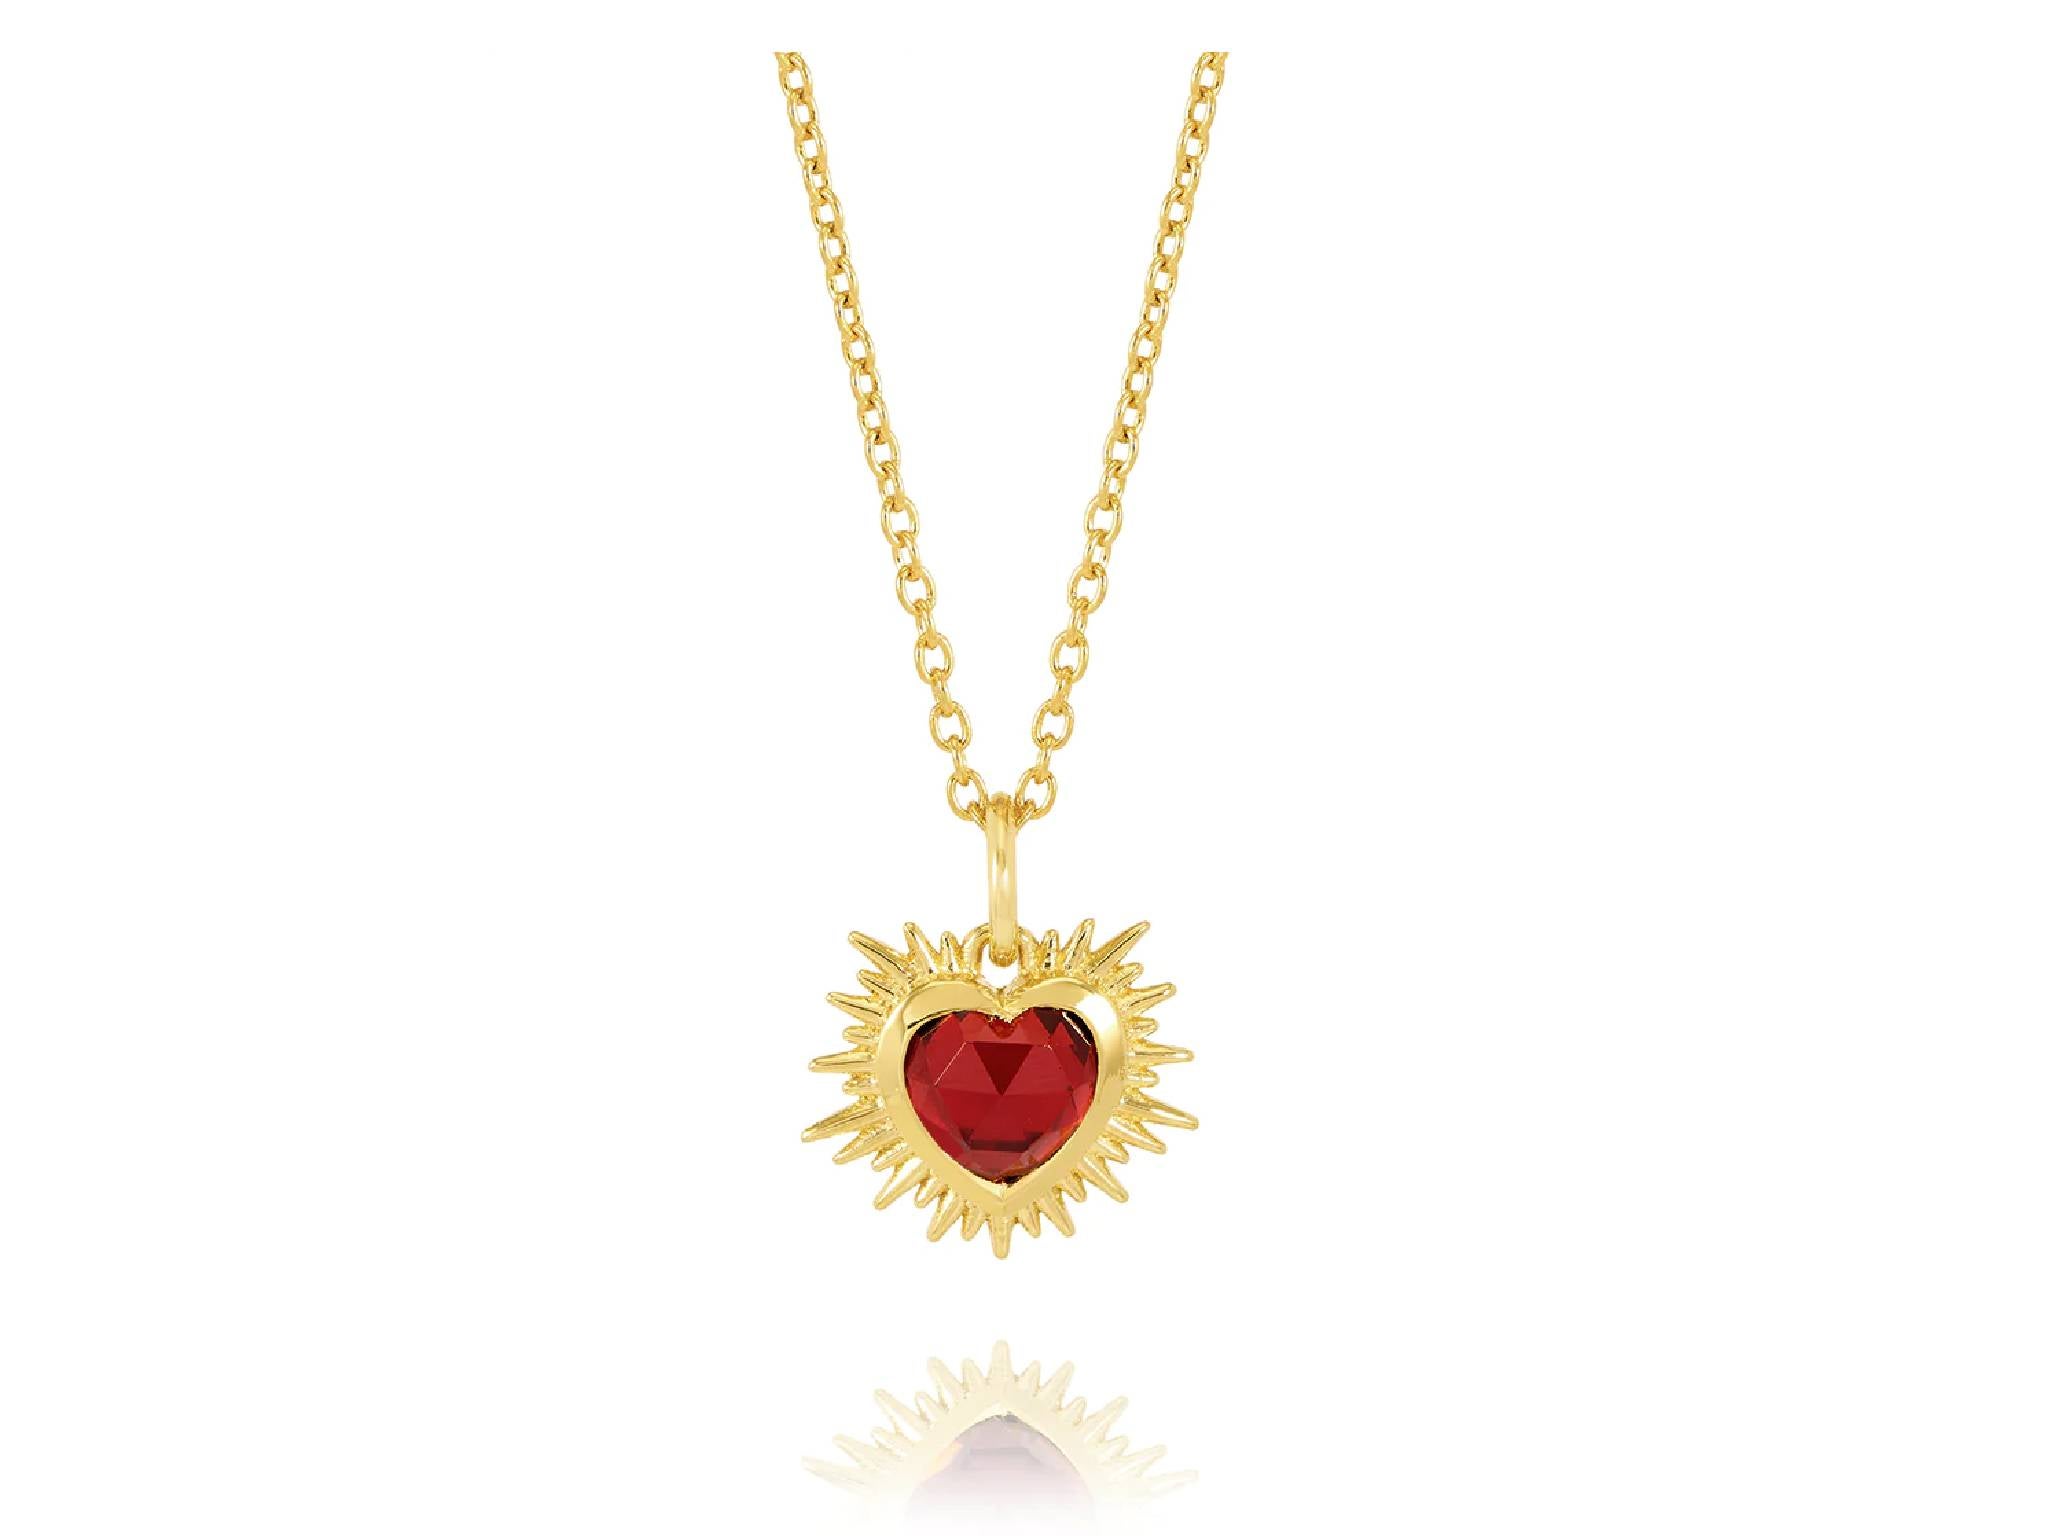 Rachel Jackson heart necklace